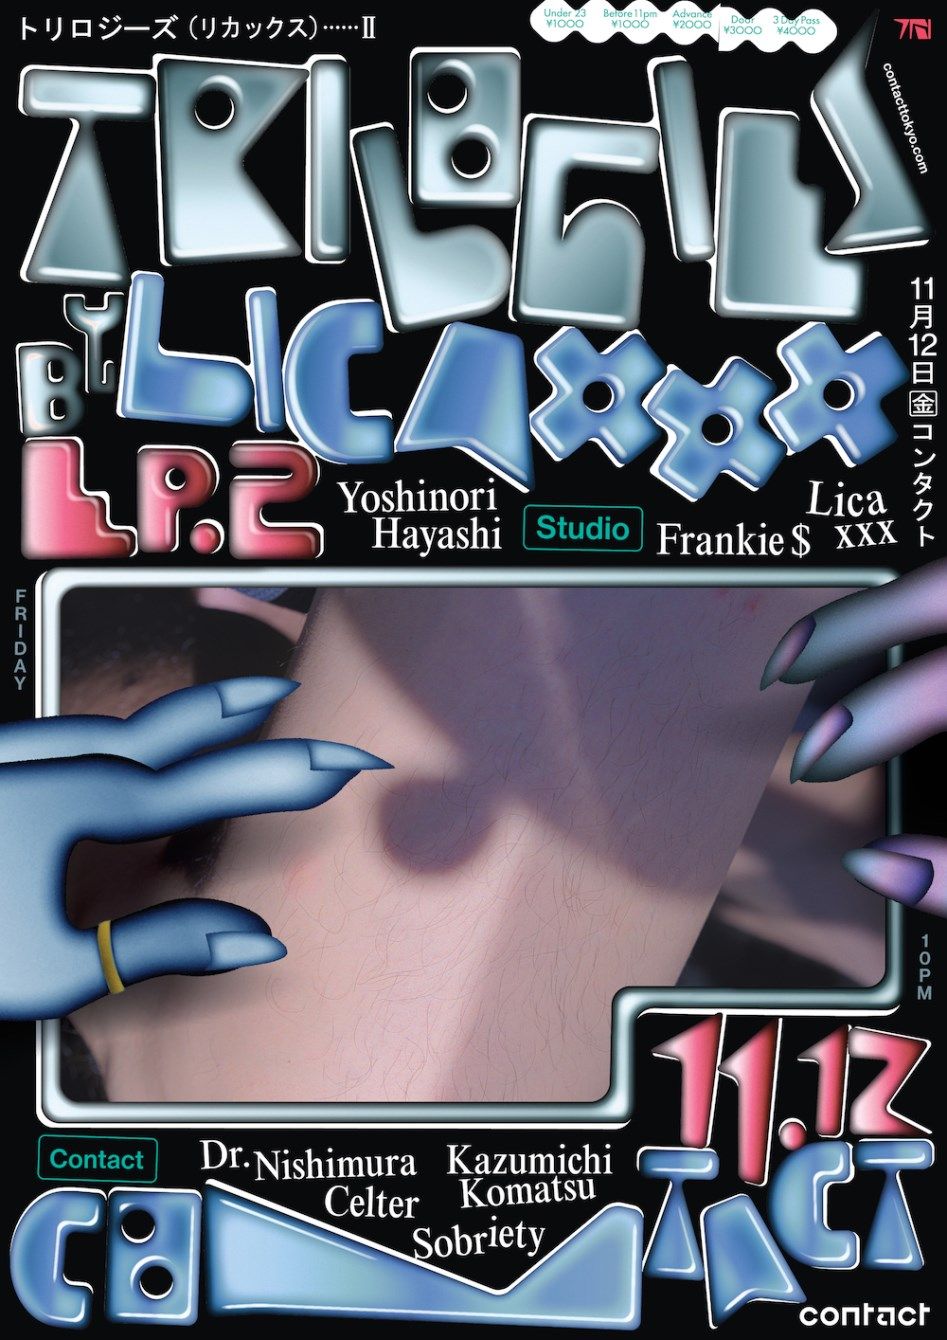 Trilogies -Licaxxx- Episode 2 - Flyer front